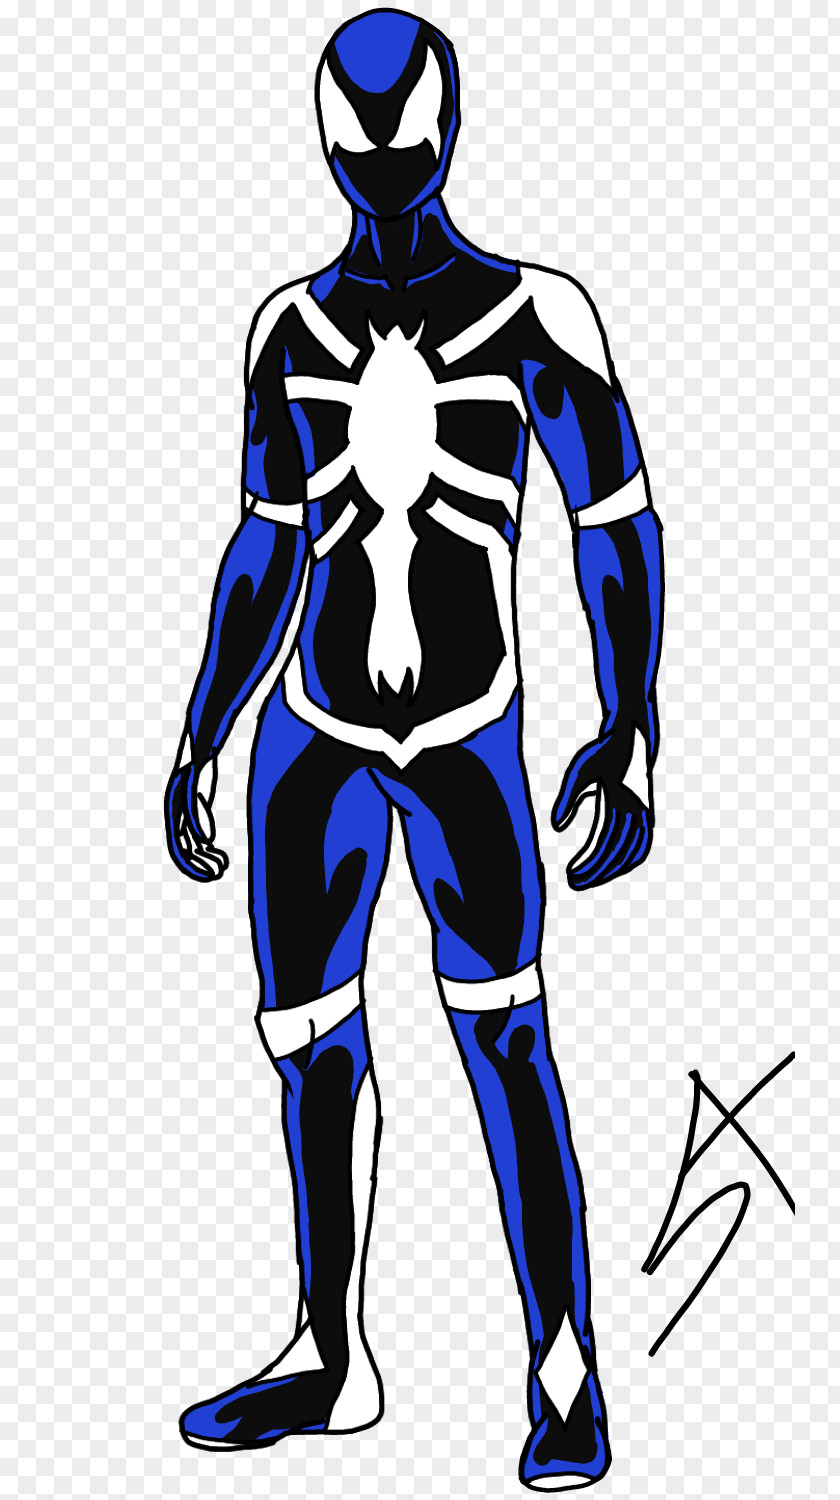 Venom Symbiote Spider-Man Superhero PNG